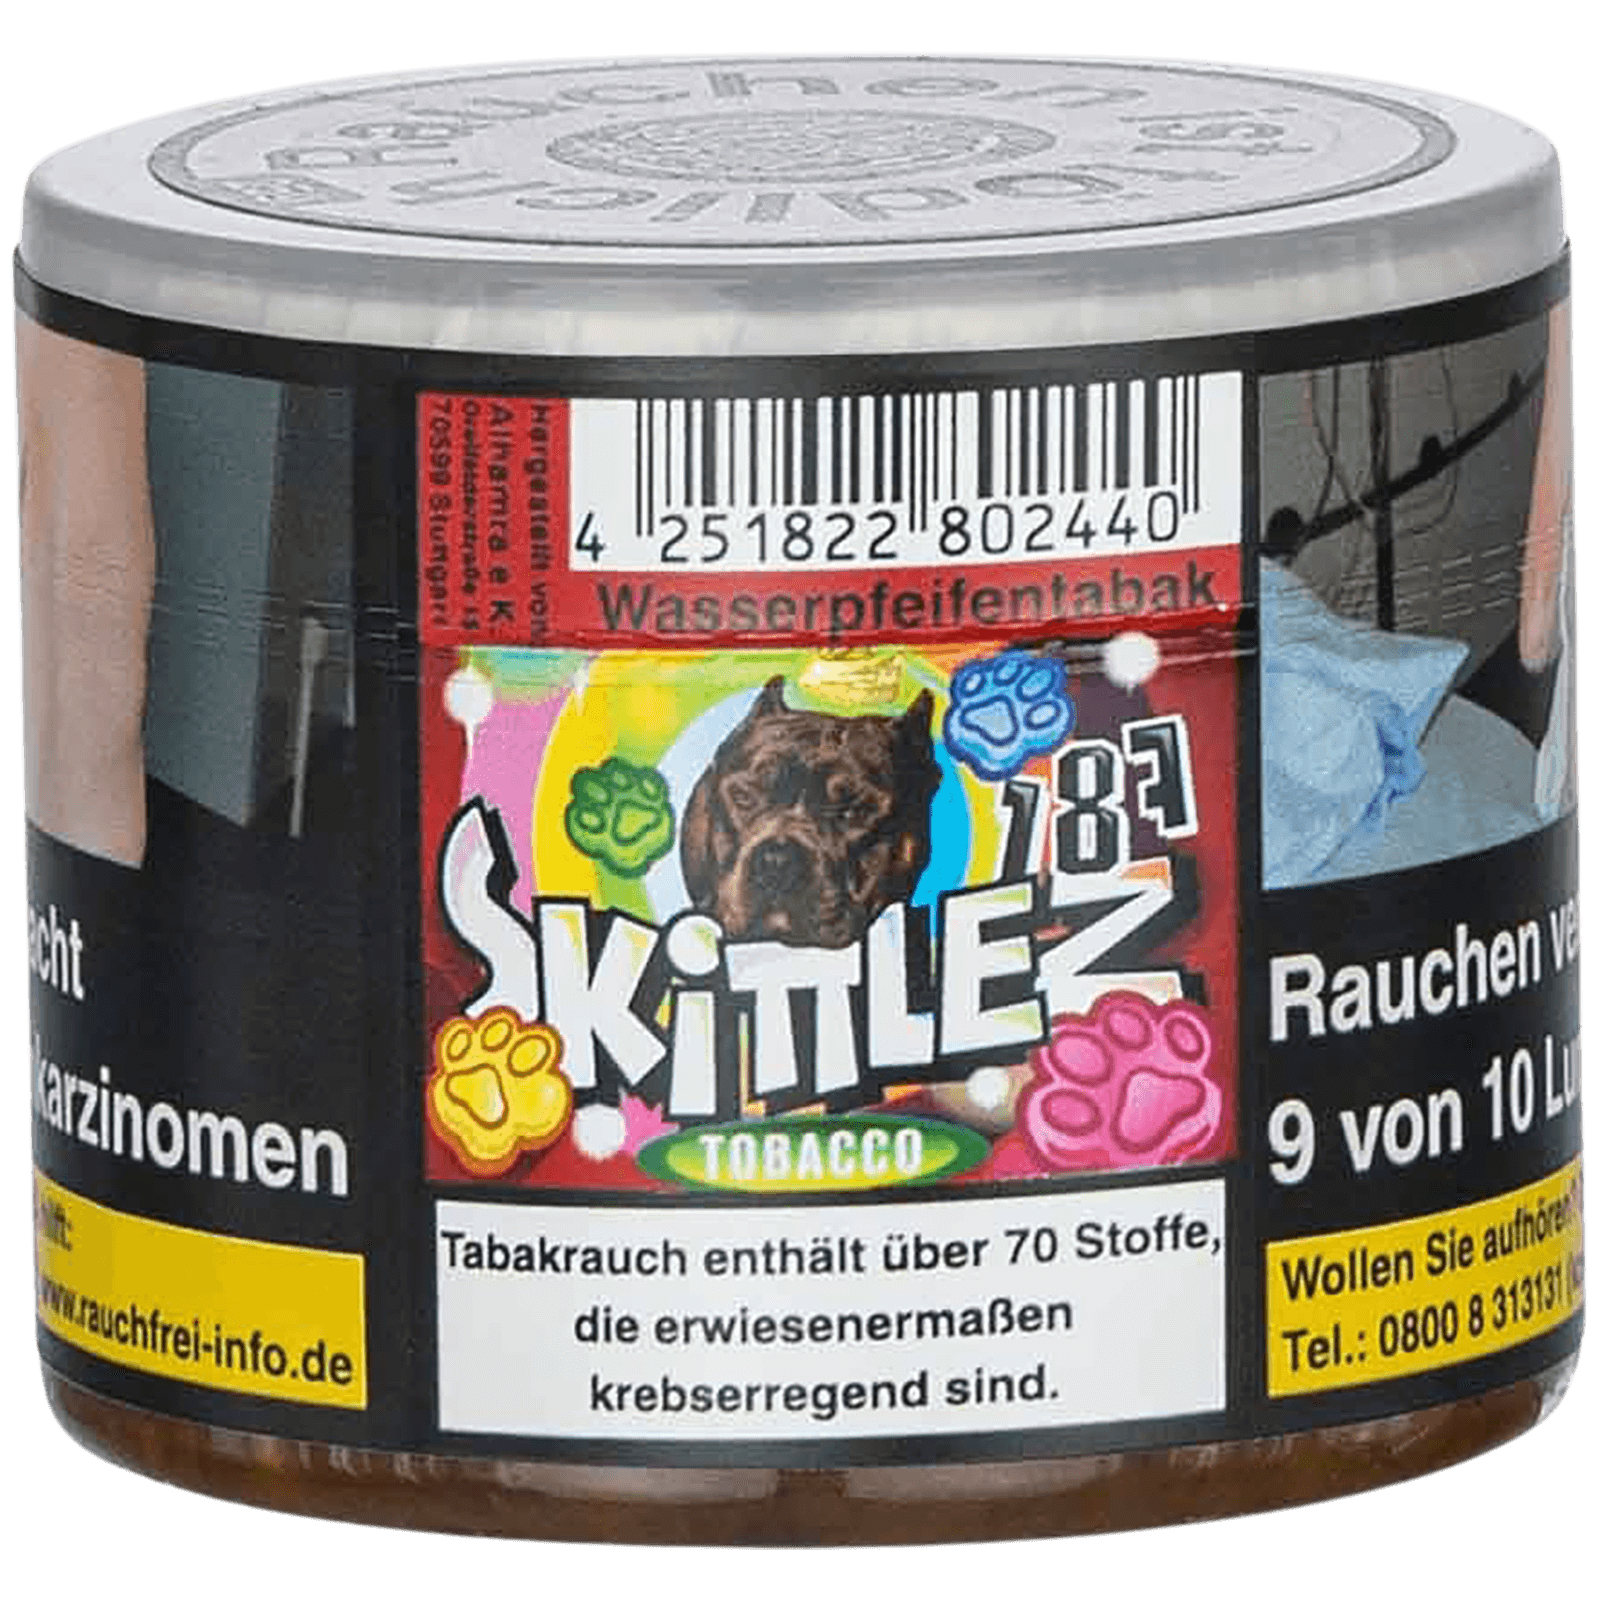 187 Tobacco 25g - Skittlez